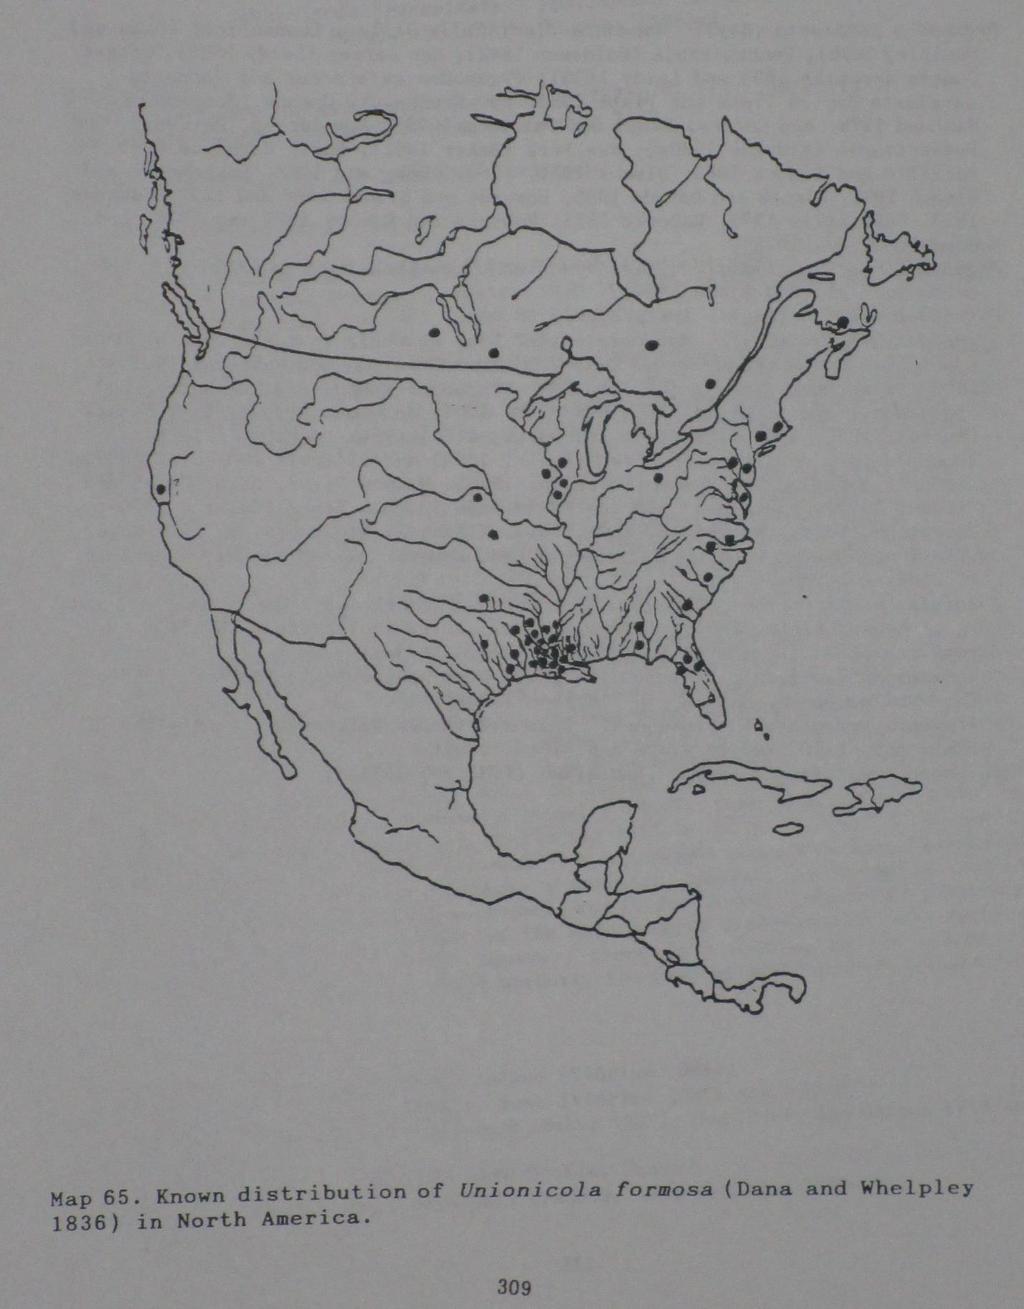 Map 1. Distribution of U.